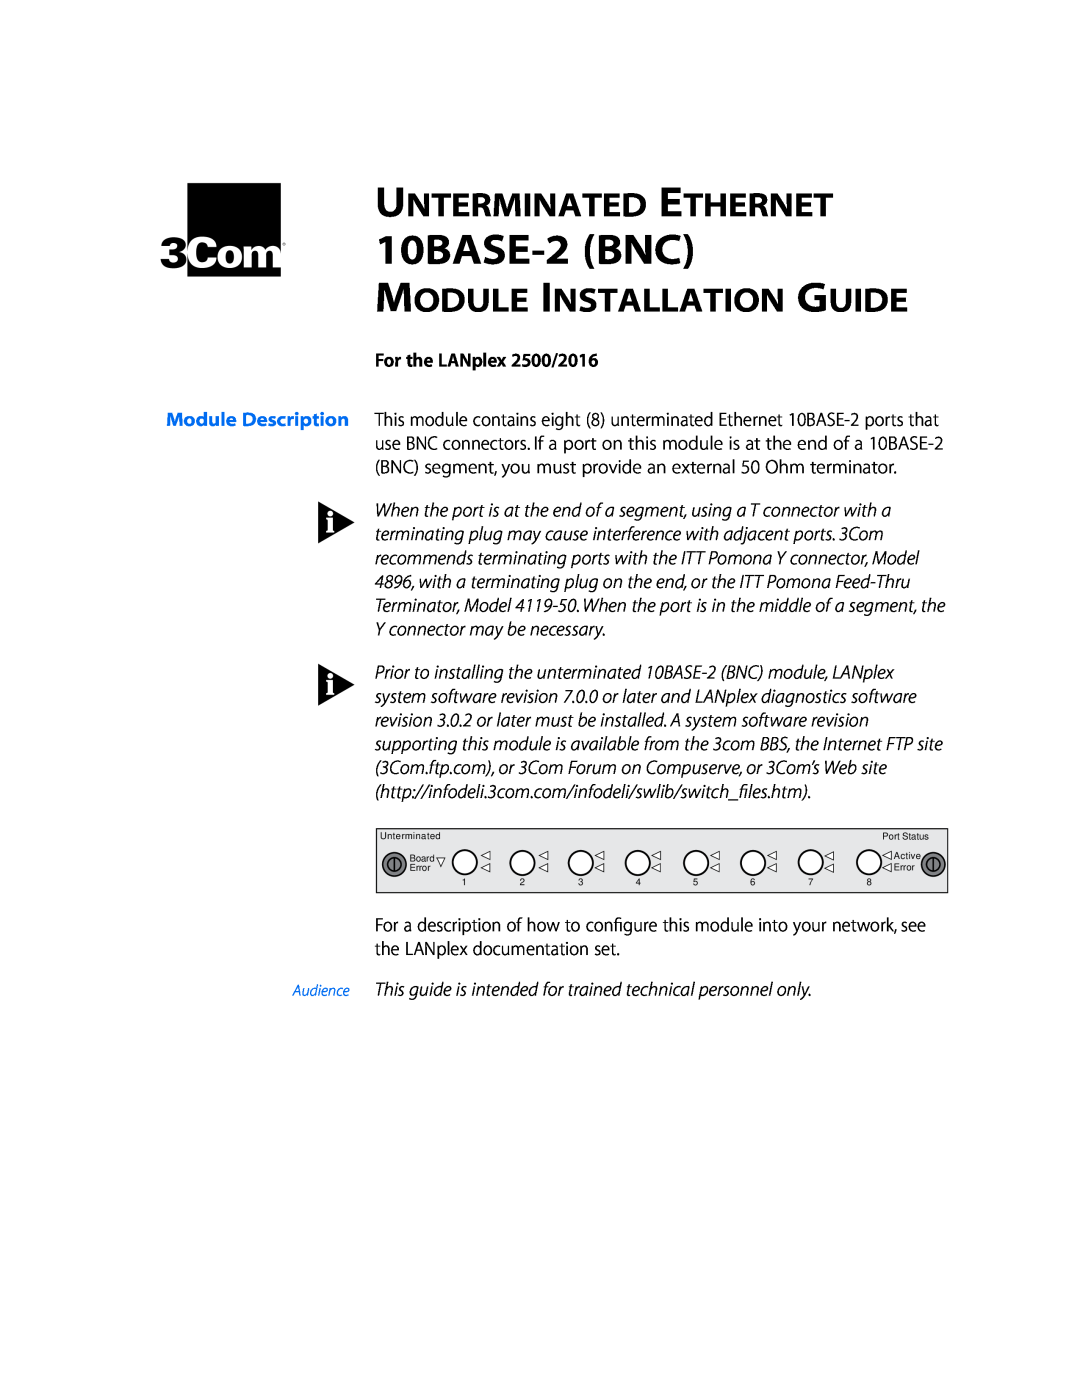 3Com manual 10BASE-2 BNC, Unterminated Ethernet, Module Installation Guide 